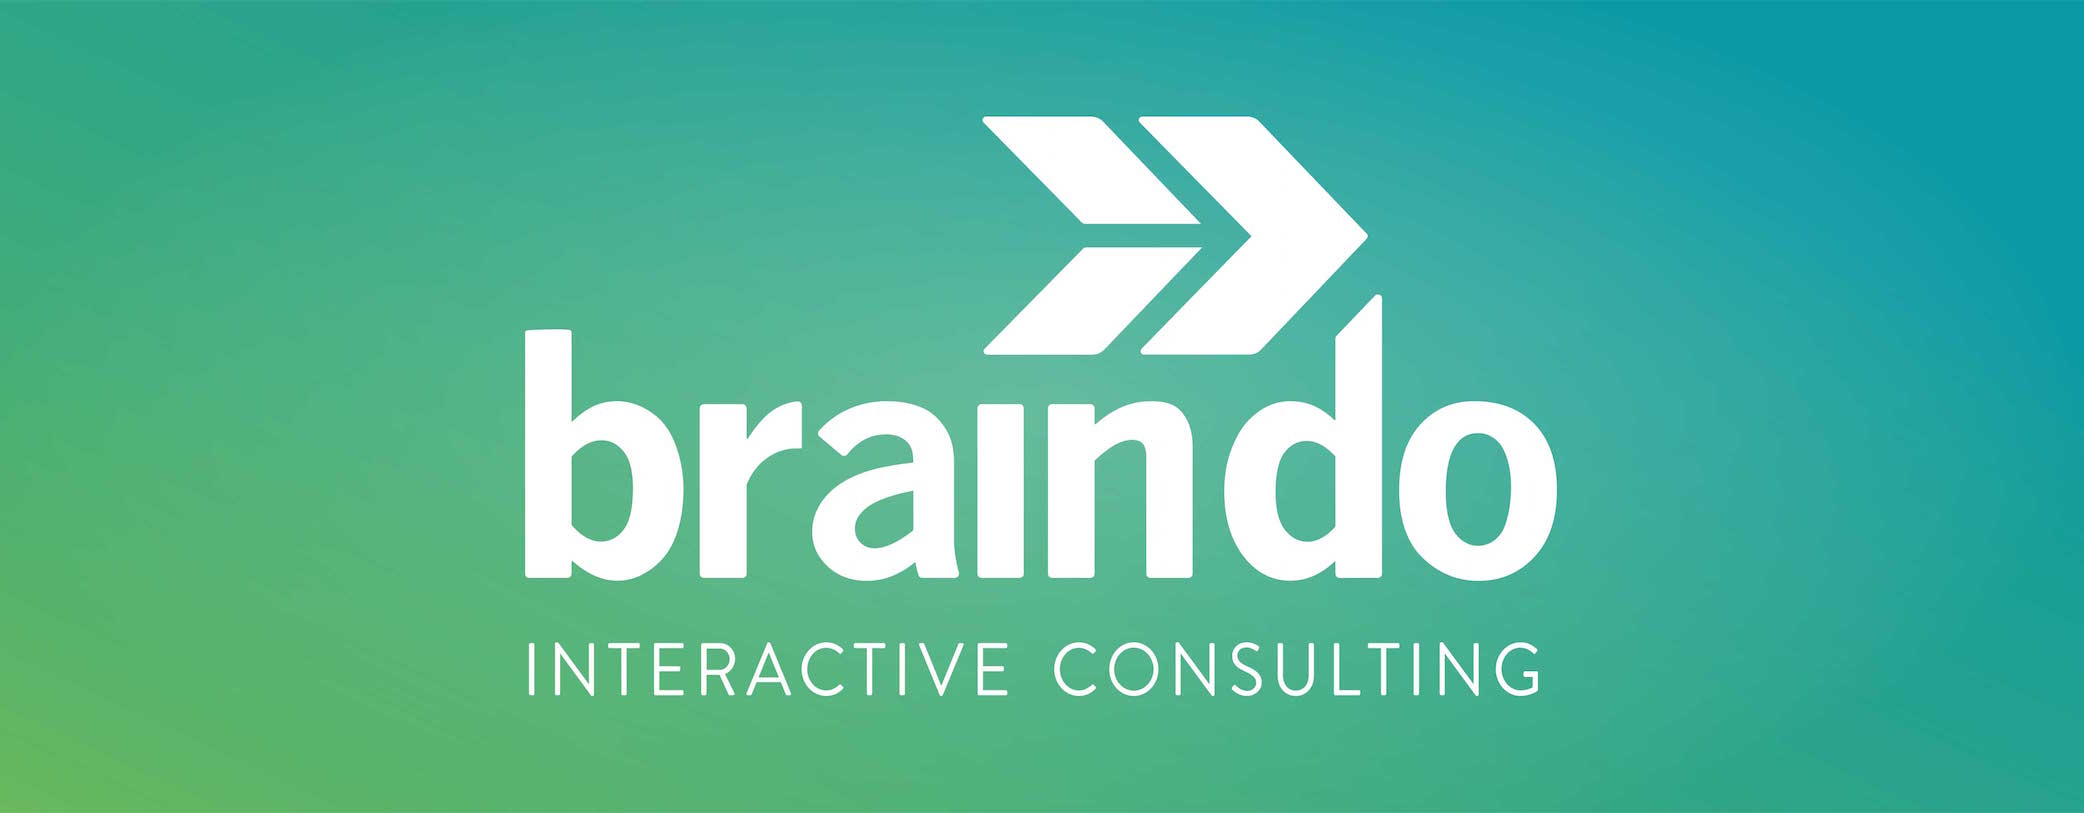 blog-braindo-logo-1